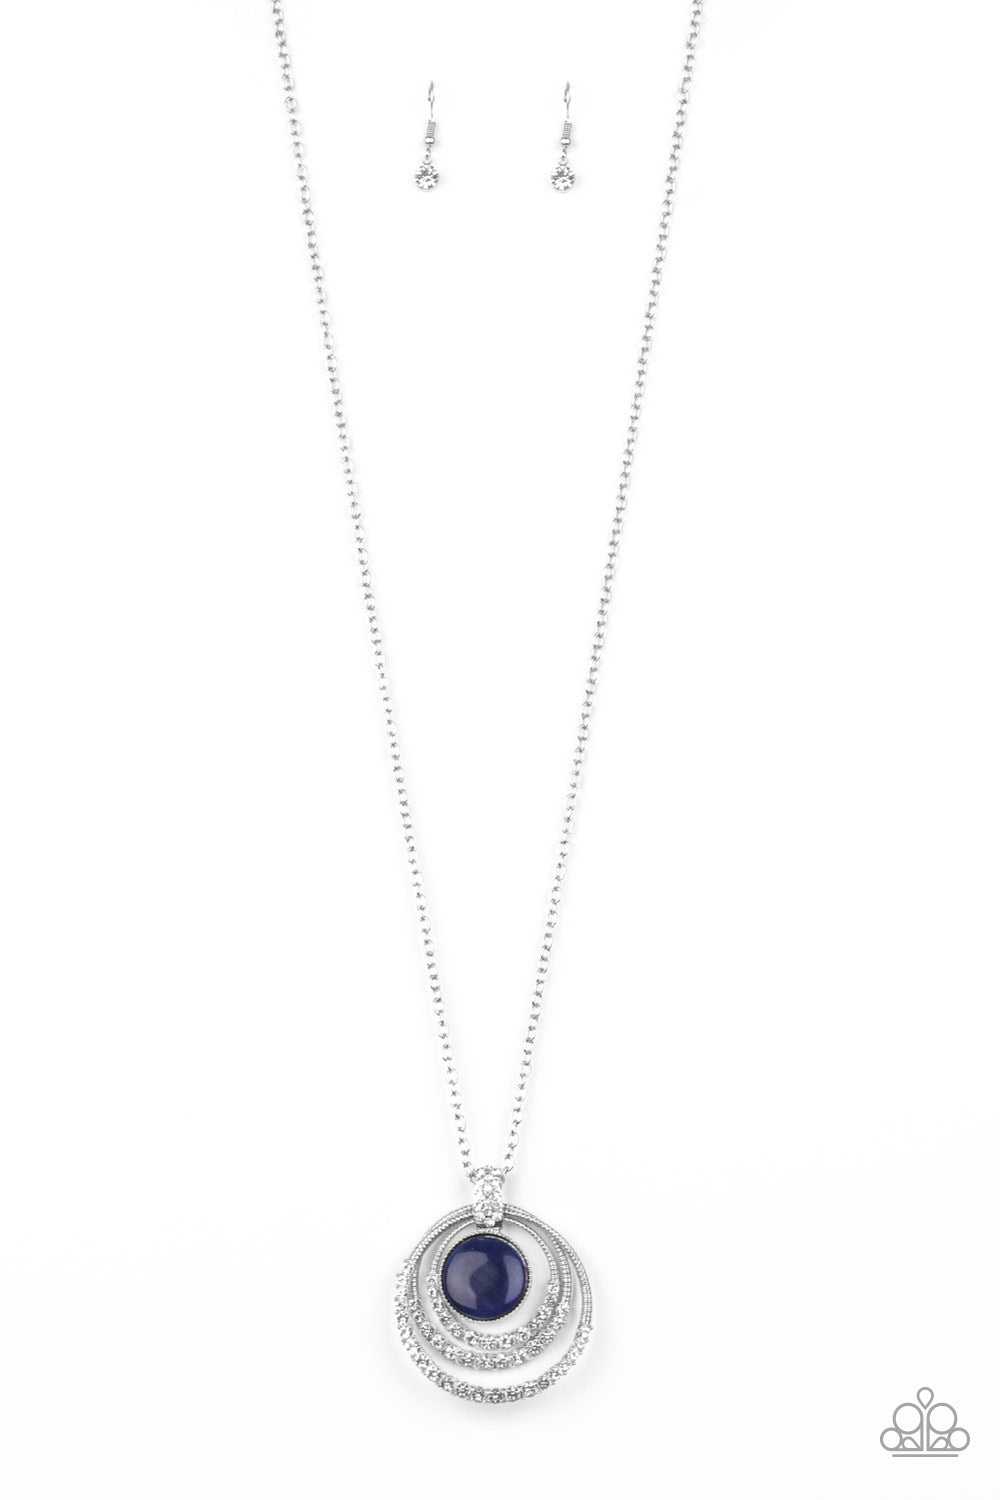 A Diamond A Day - Blue Necklace - Paparazzi Accessories - Paparazzi Accessories 